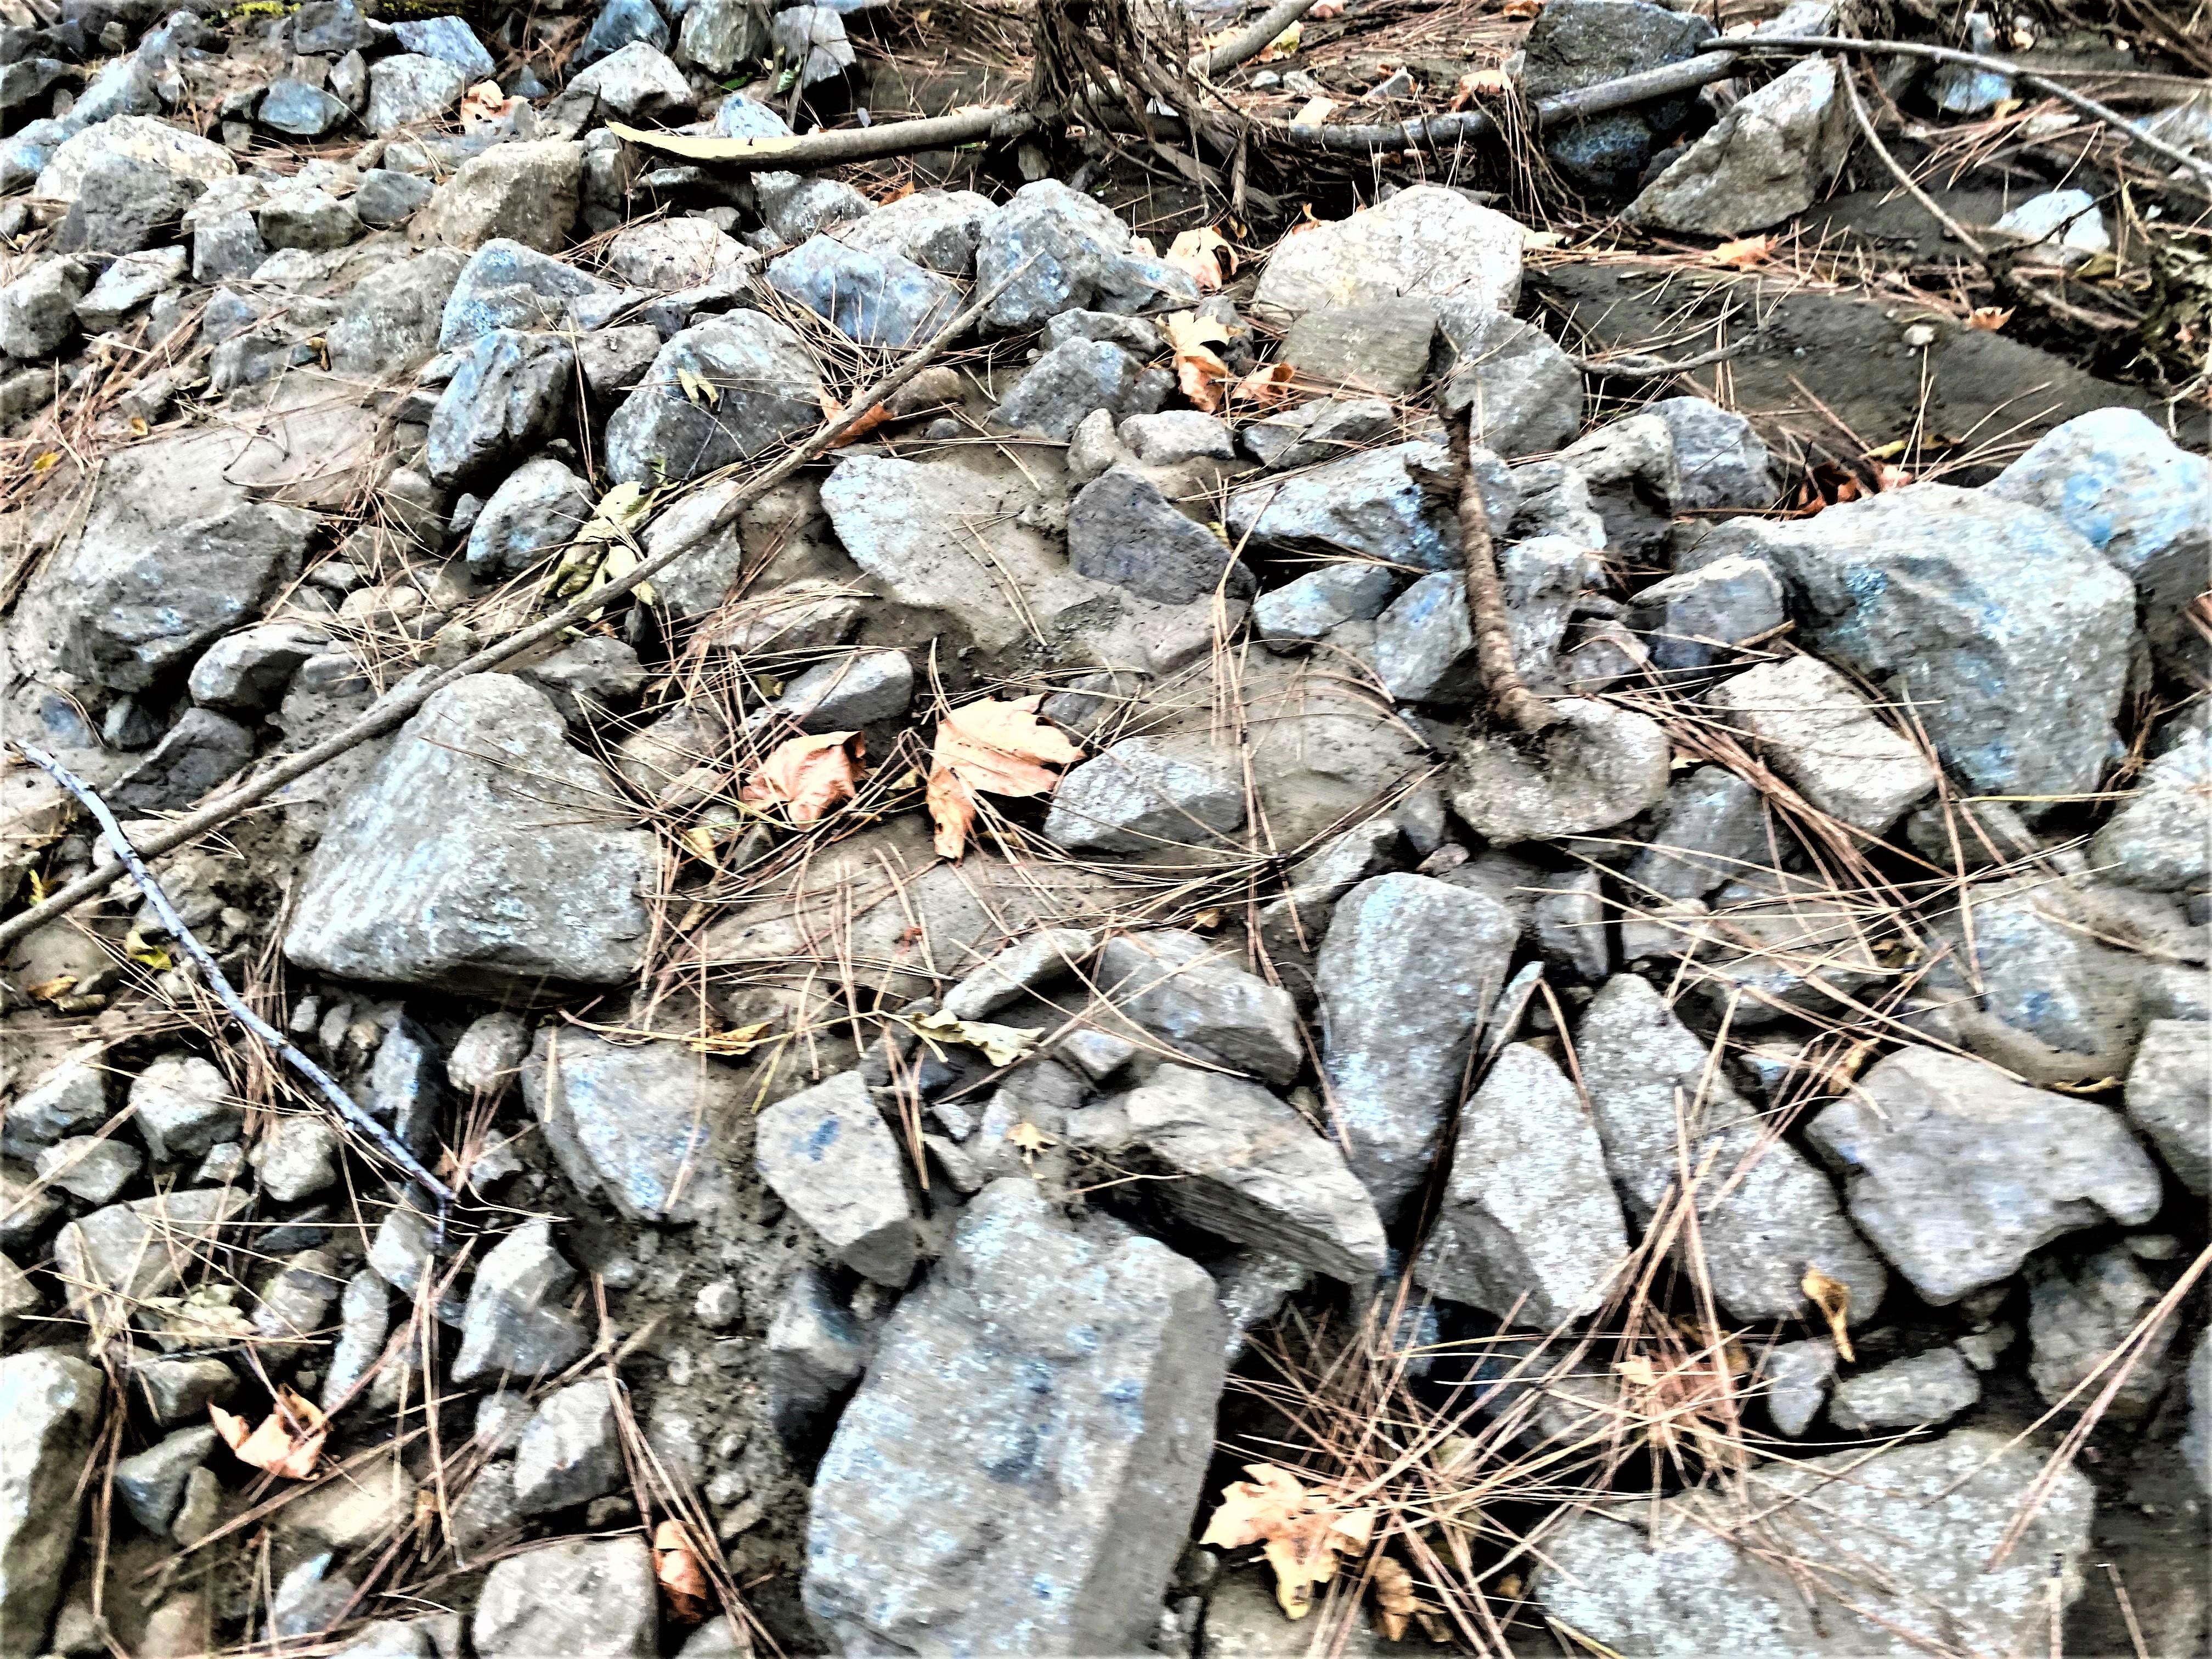 Image showing debris flow material in Little Humbug Creek